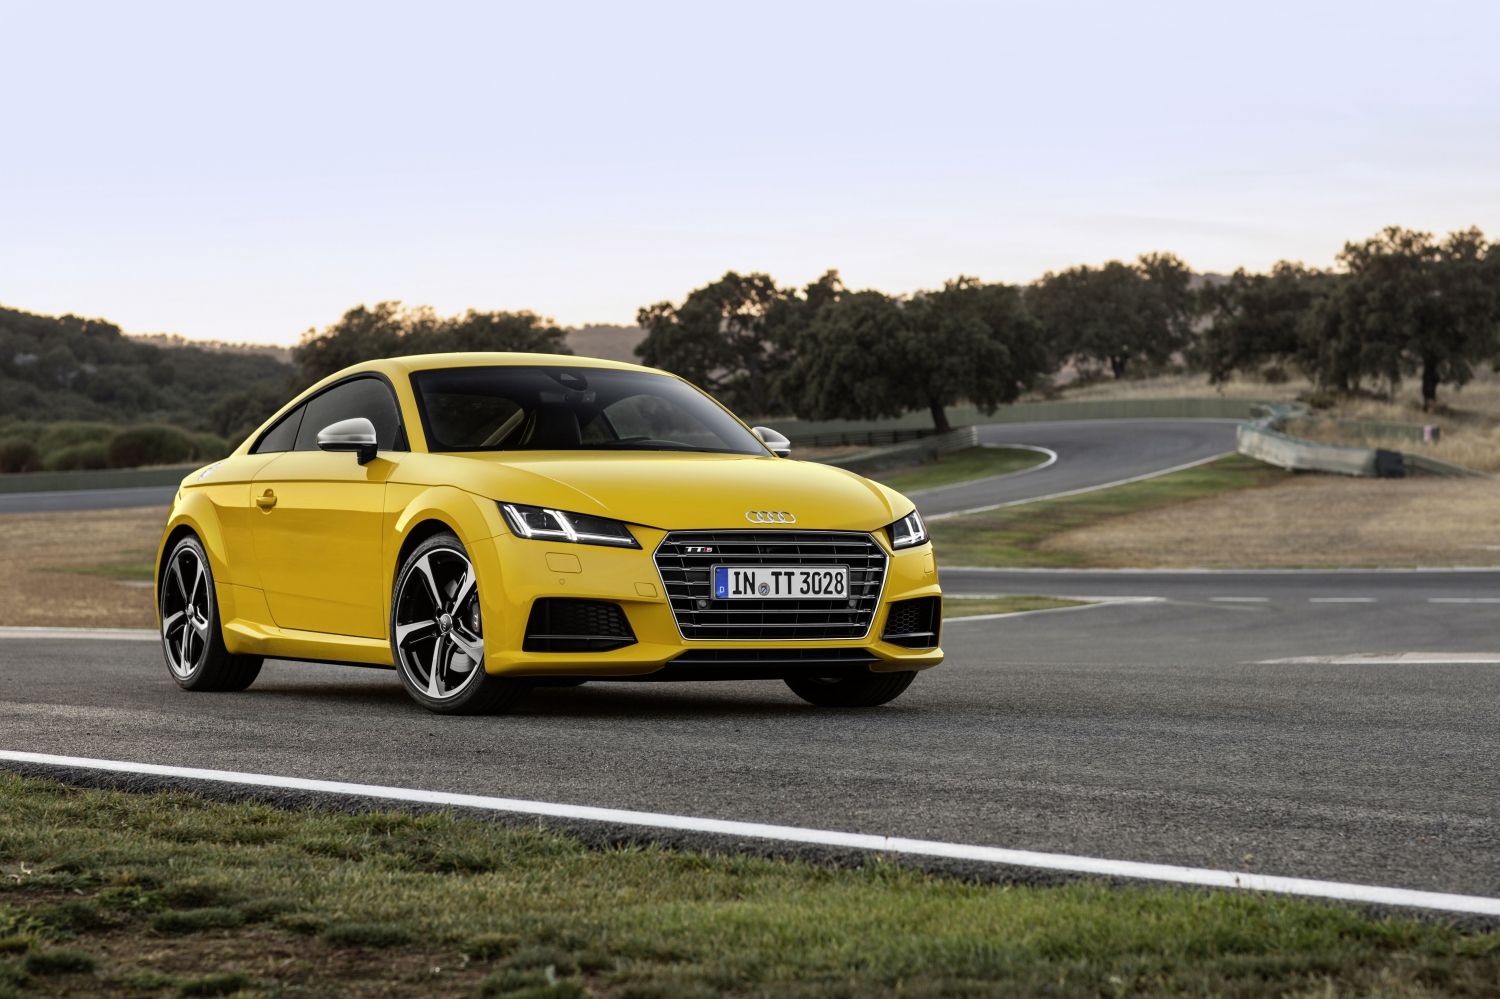 2019 Audi TTS yellow sports car parked